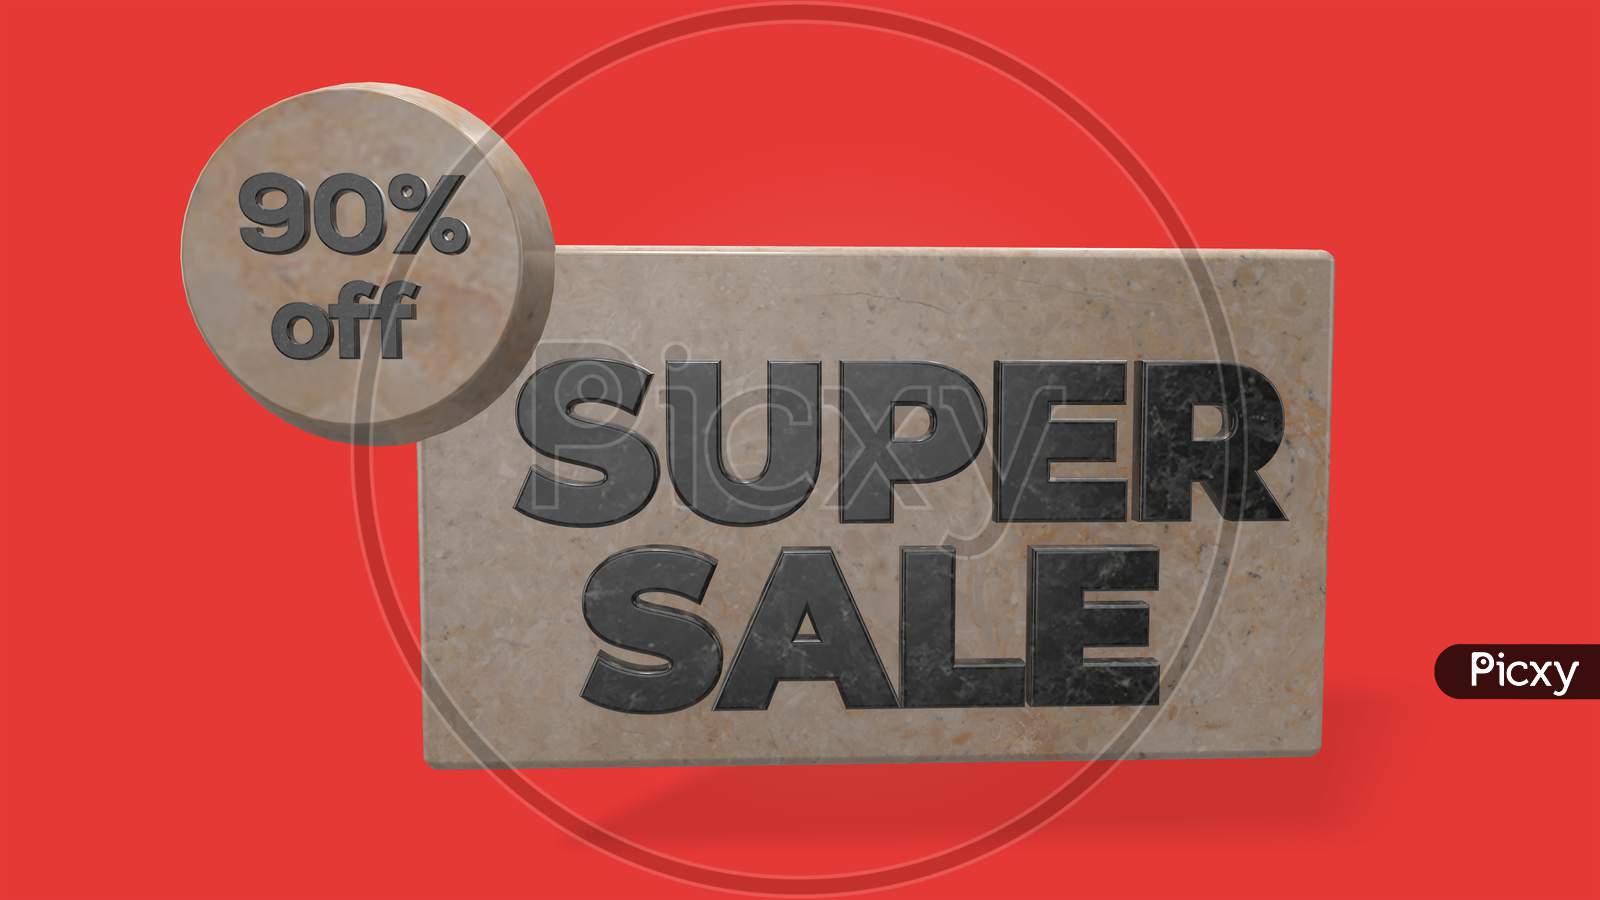 90% Off Super Sale 3D Render Use For Landing Page, Template, Ui, Website, Poster, Banner, Flyer, Background, Gift Card, Coupon, Label, Wallpaper,Sale Promotion,Advertising, Marketing